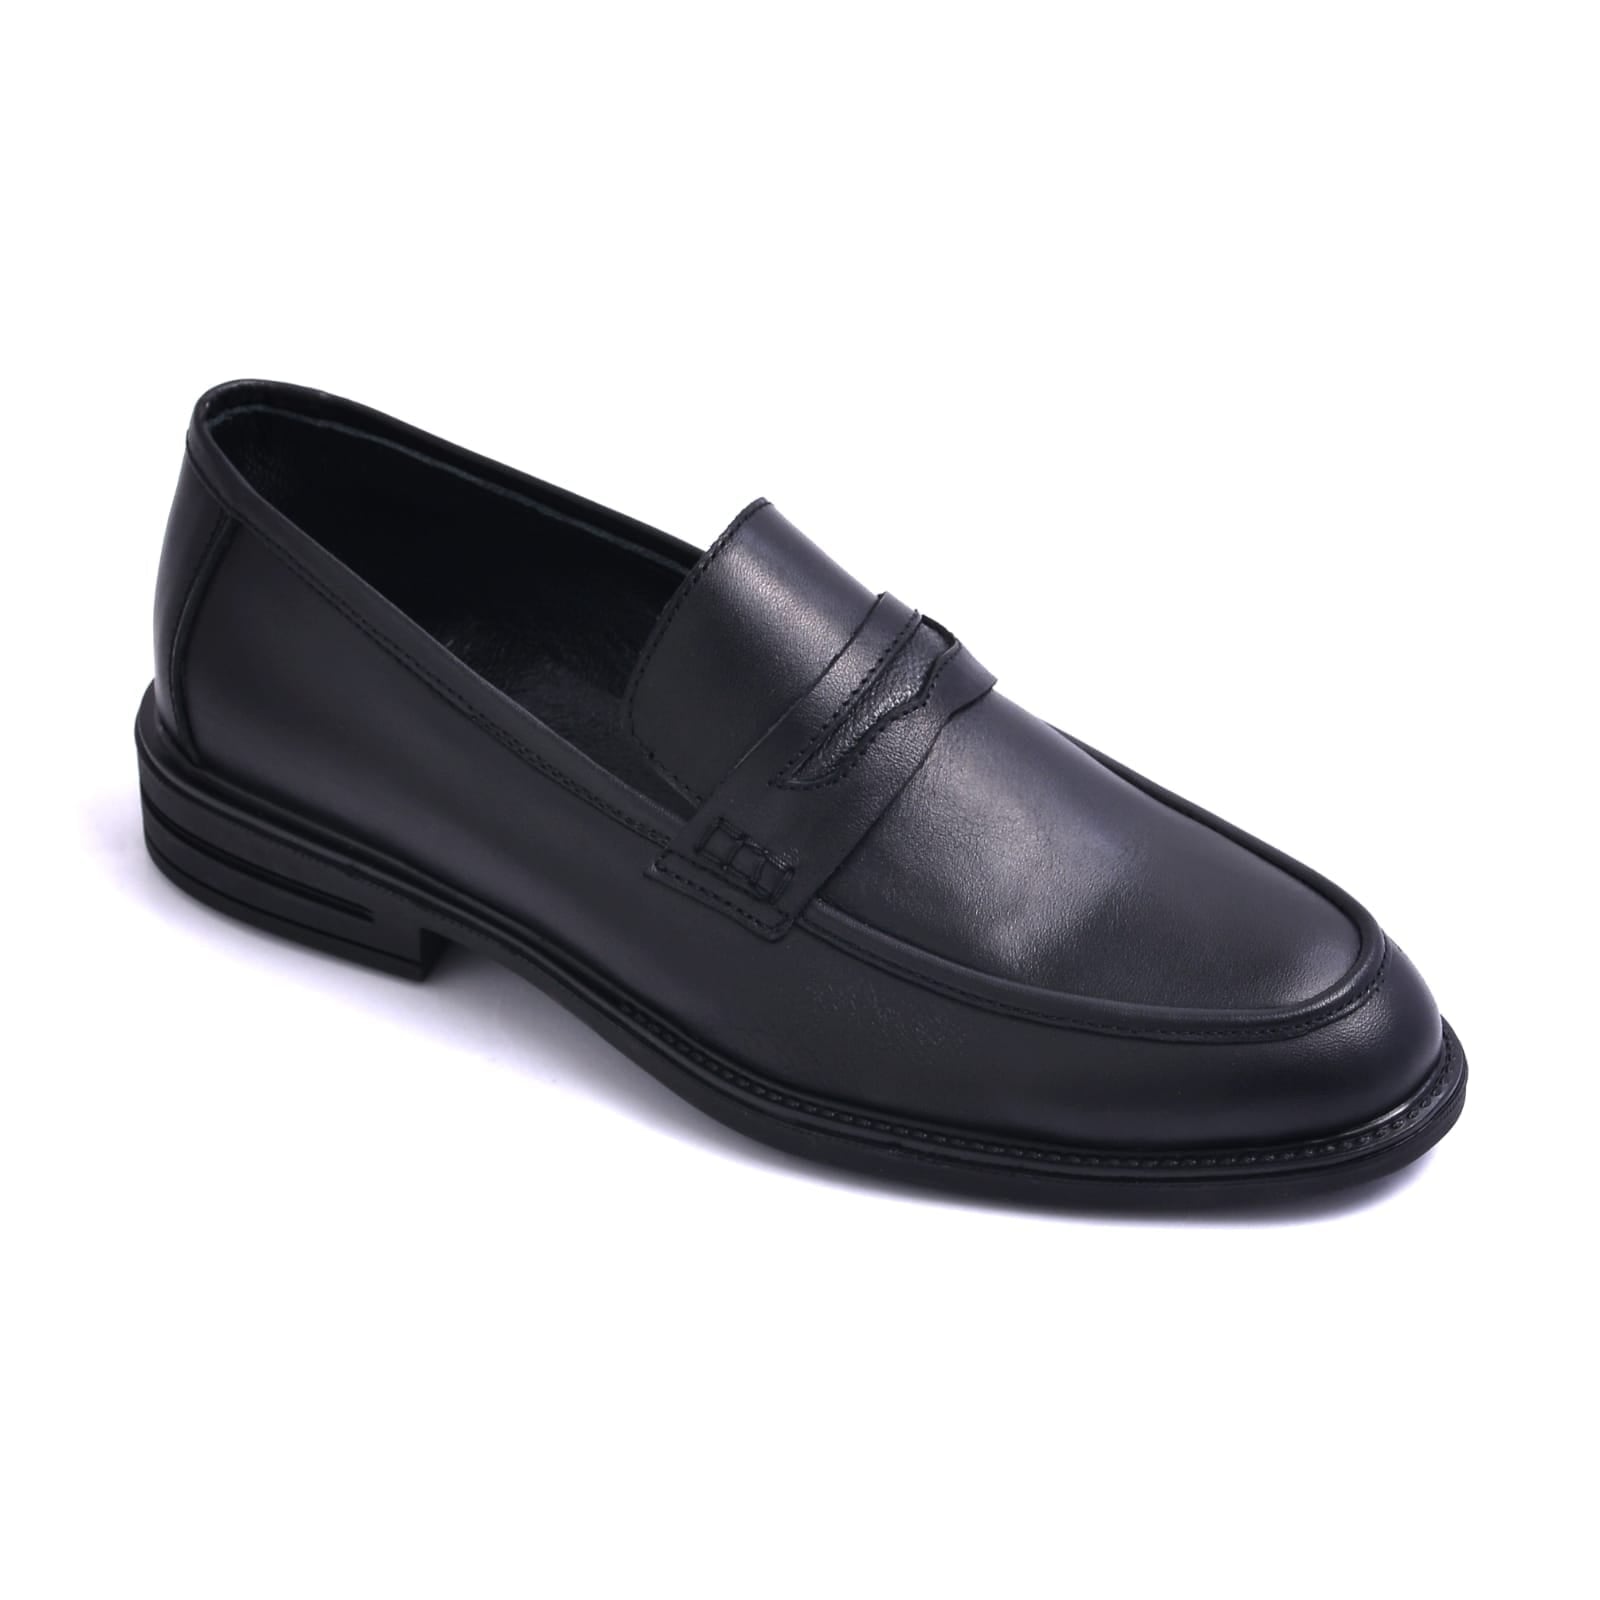 Autentico - Classic leather penny Loafers dress shoes for men (Signatu